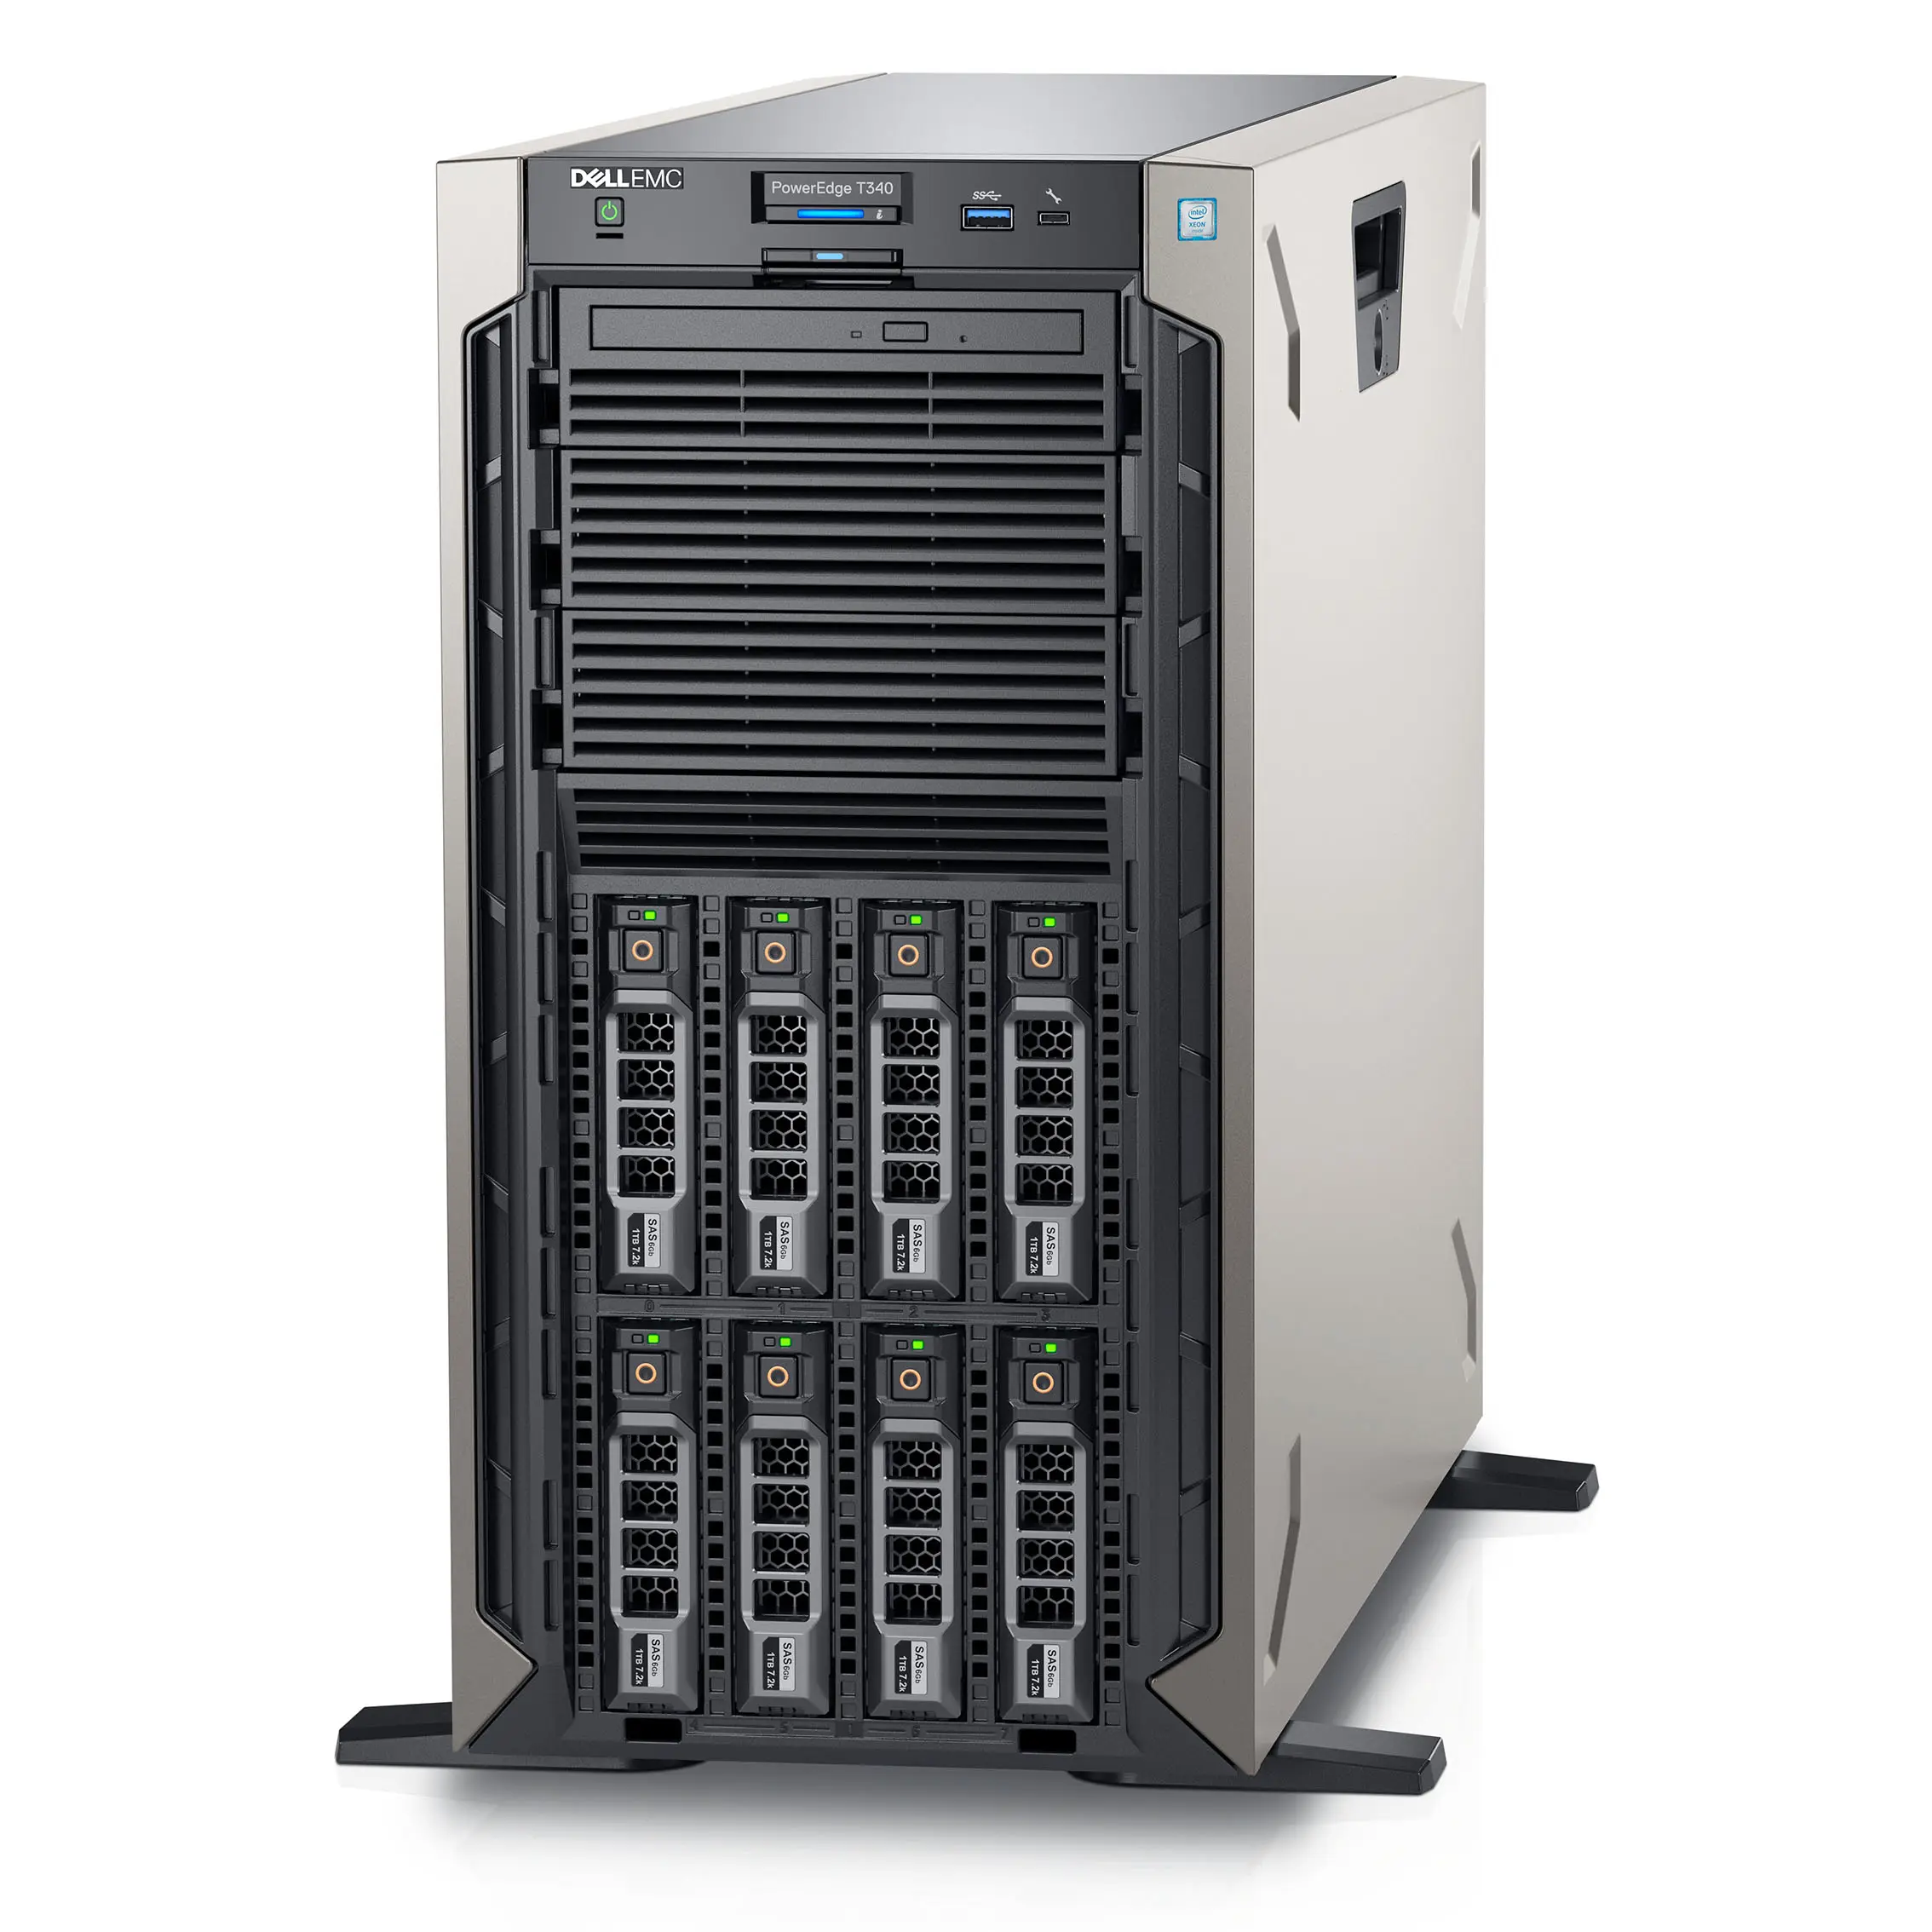 New Dells Server PowerEdge T340CPUミニ機器サーバーPCコンピューターサーバー